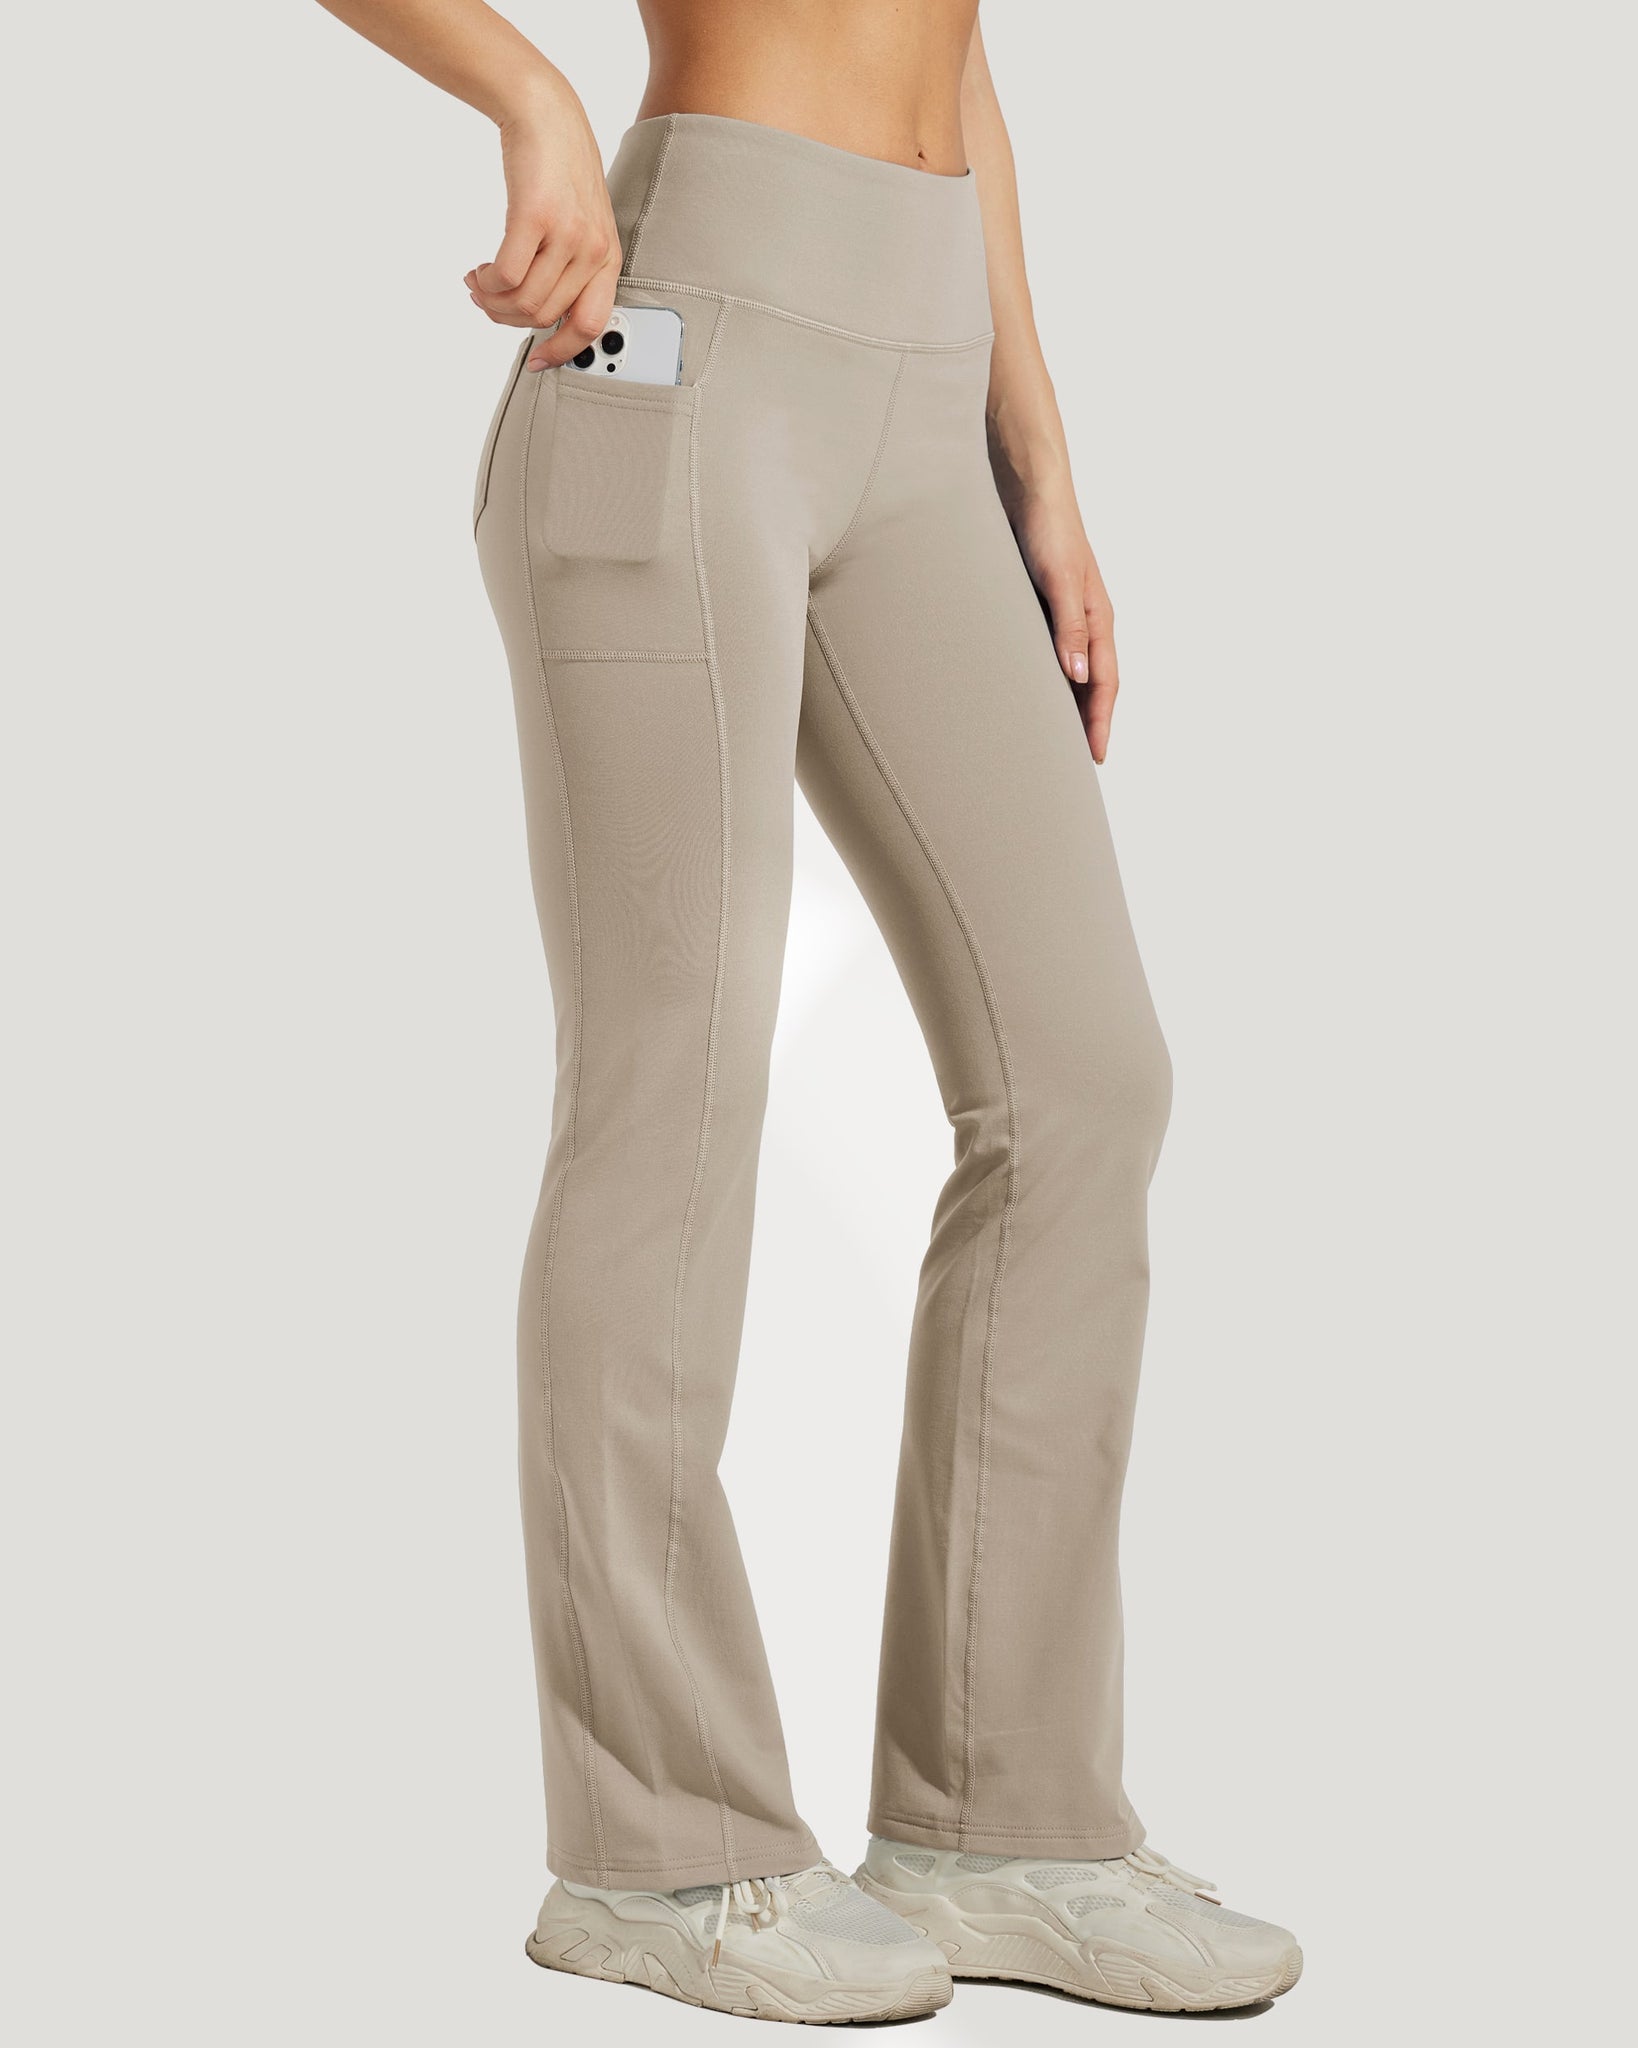 Women's Fleece Lined Bootcut Yoga Pants_Khaki_model3